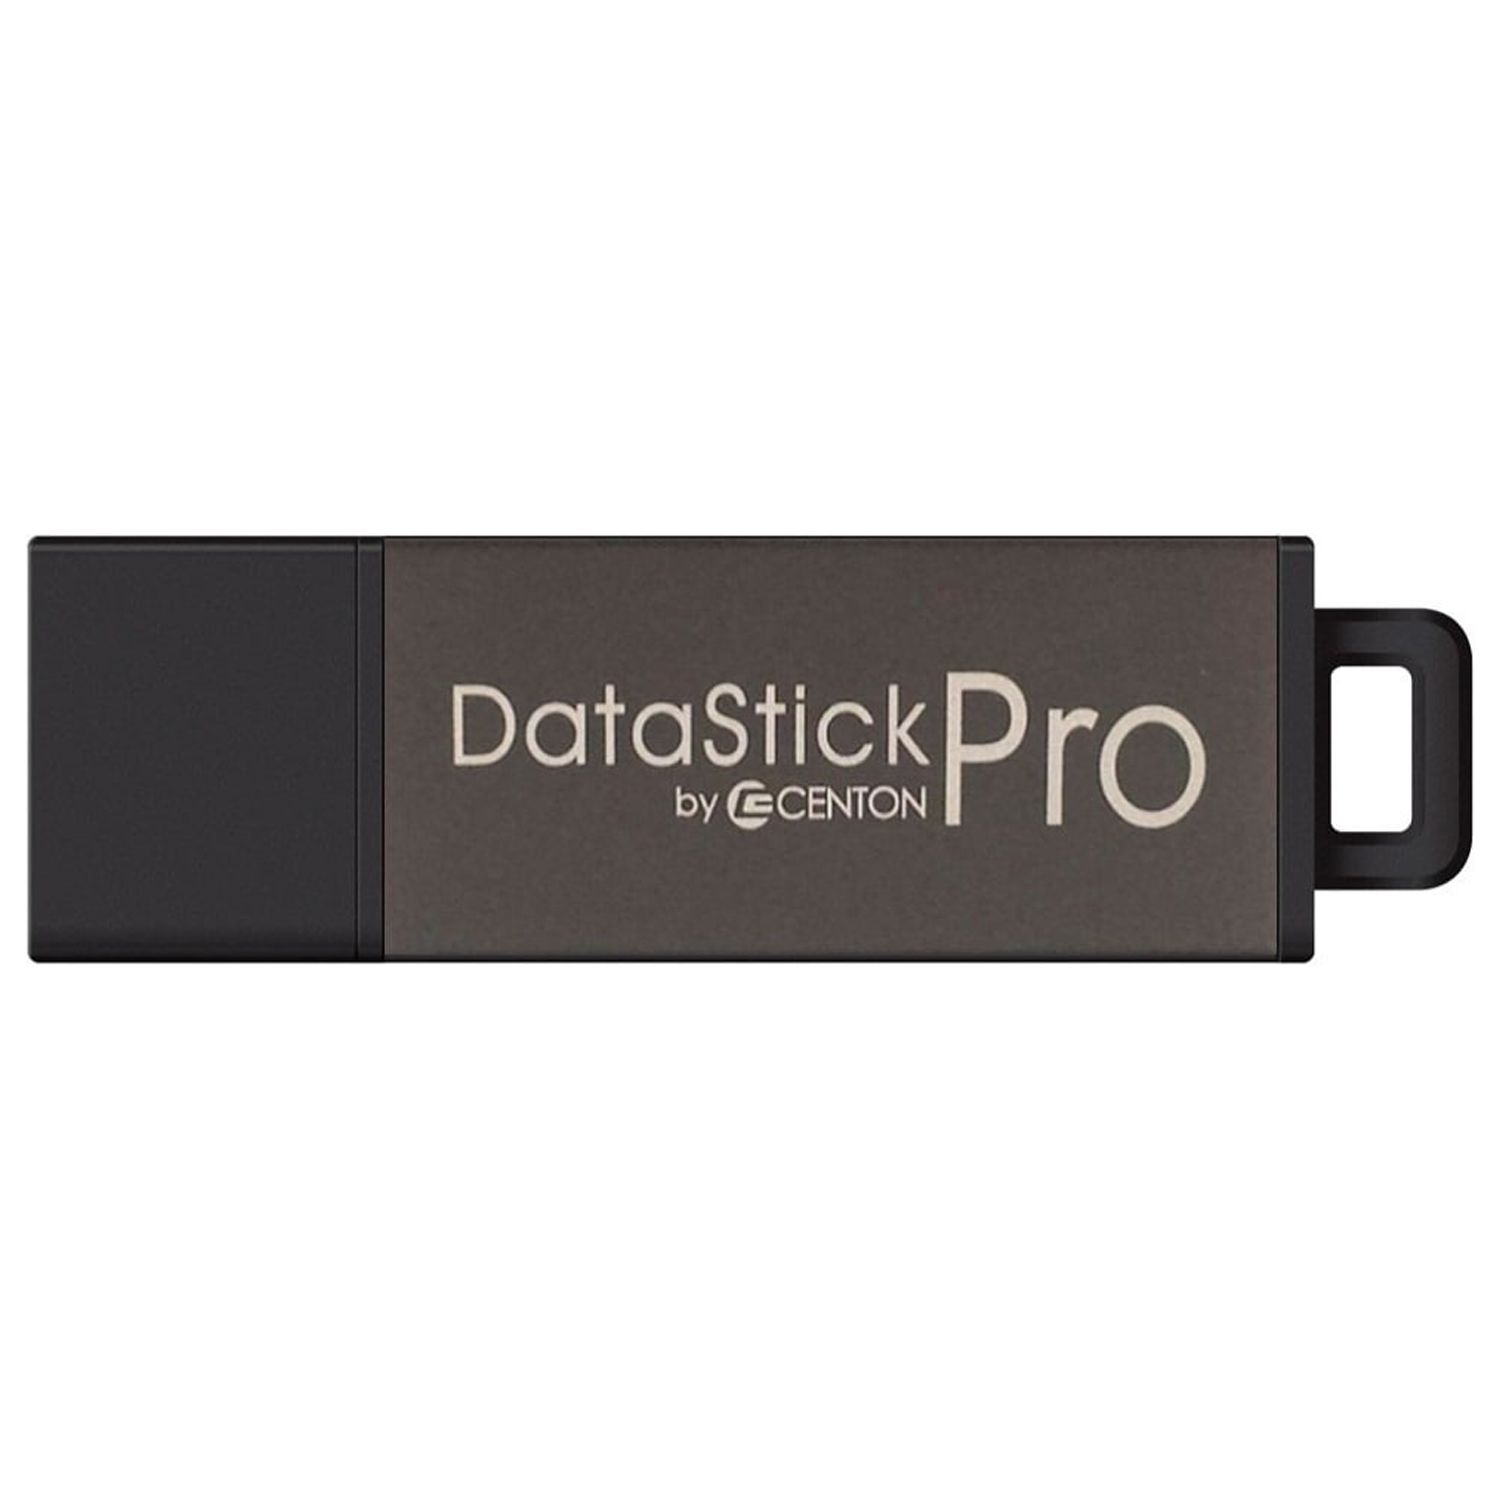 Centon USB 2.0 Datastick Pro (Grey) 64GB - image 1 of 5